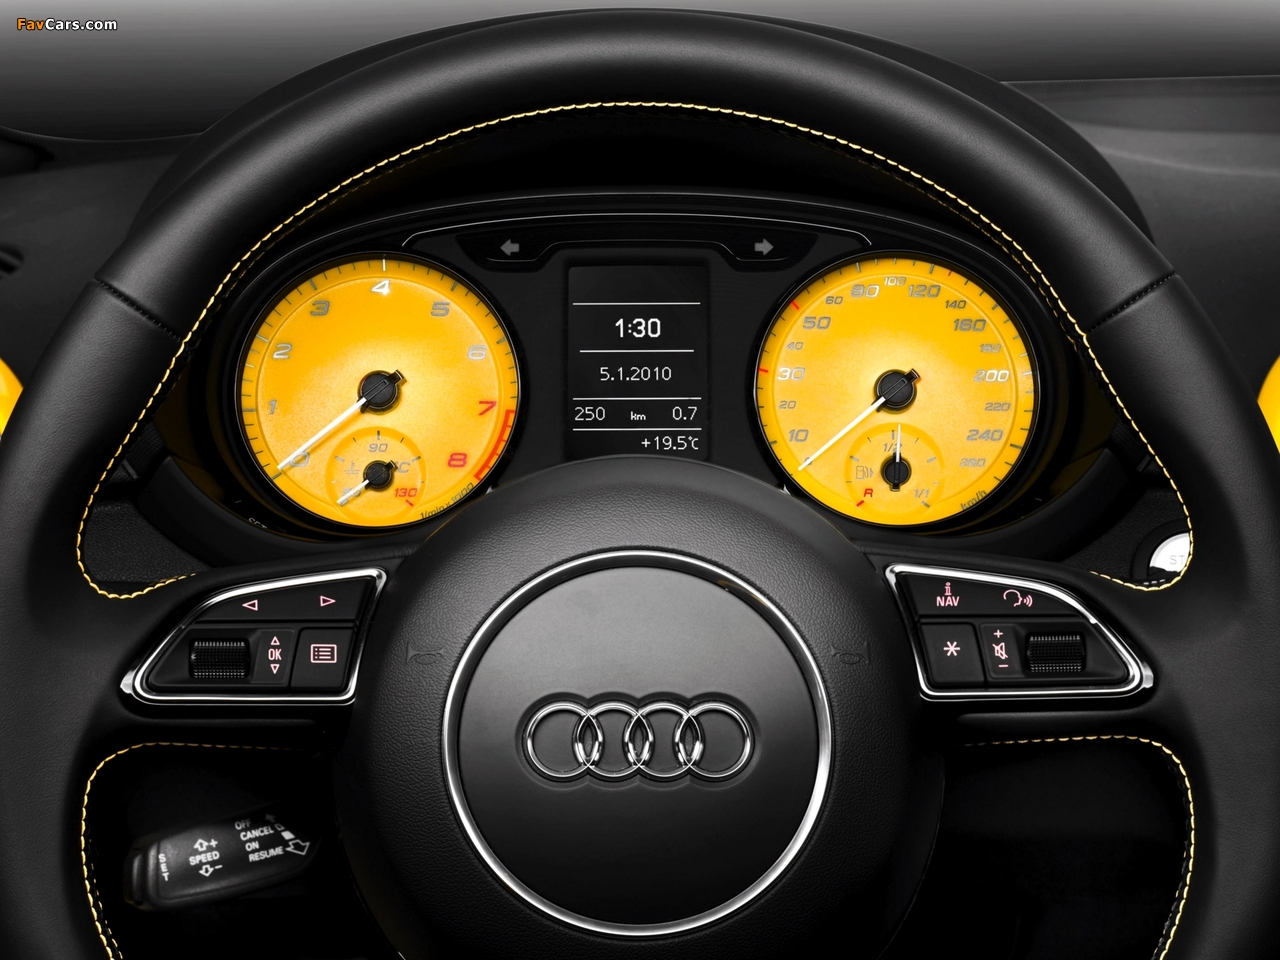 Pictures of Audi A1 Follow Me Concept 8X (2010) (1280 x 960)